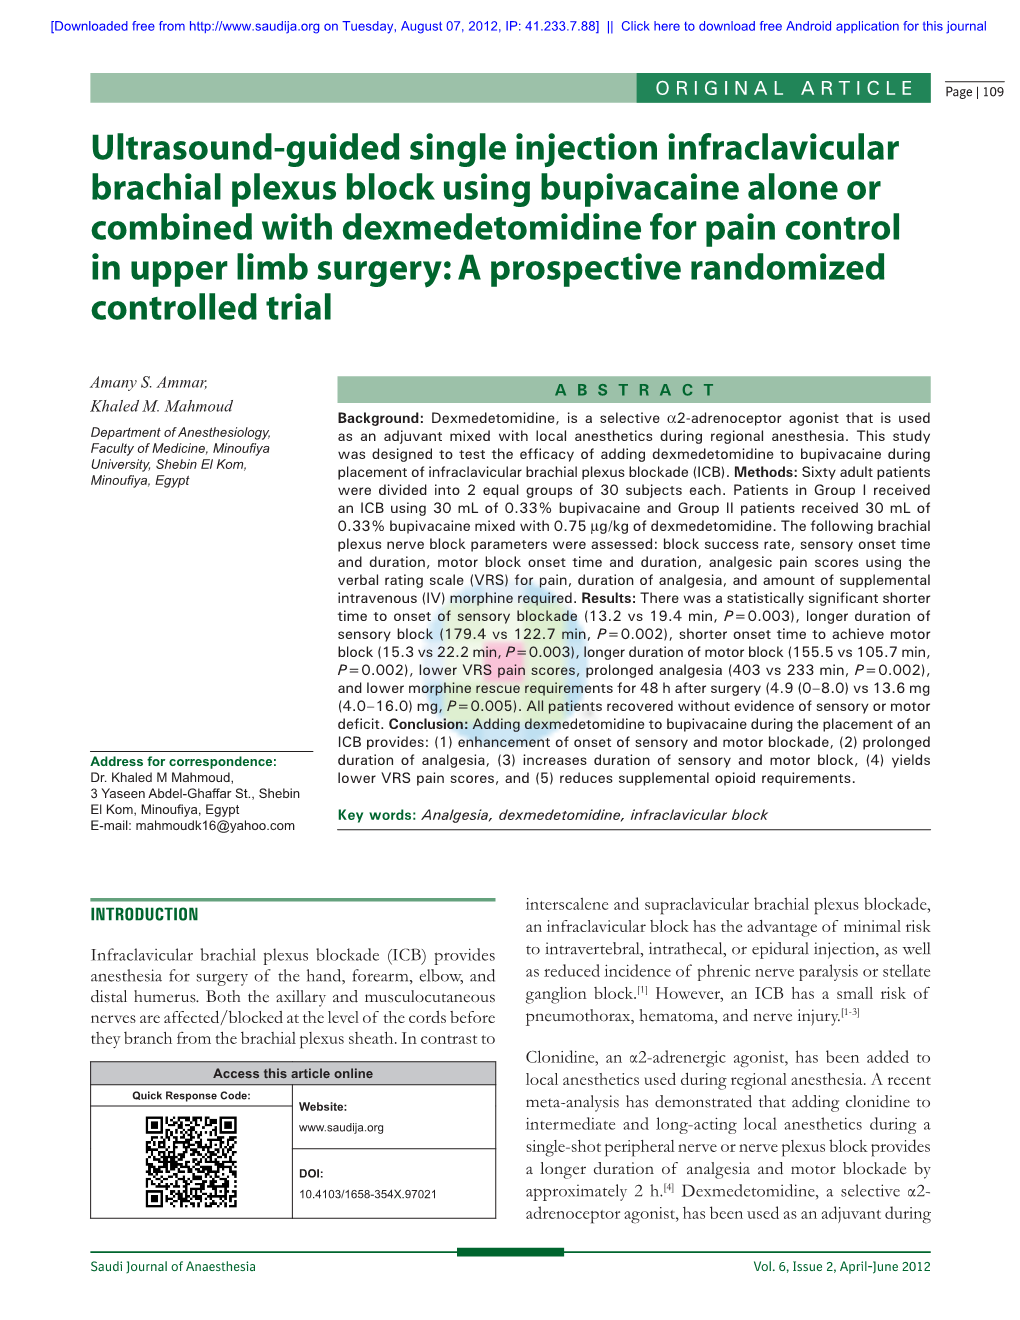 Ultrasound-Guided Single Injection Infraclavicular Brachial Plexus Block